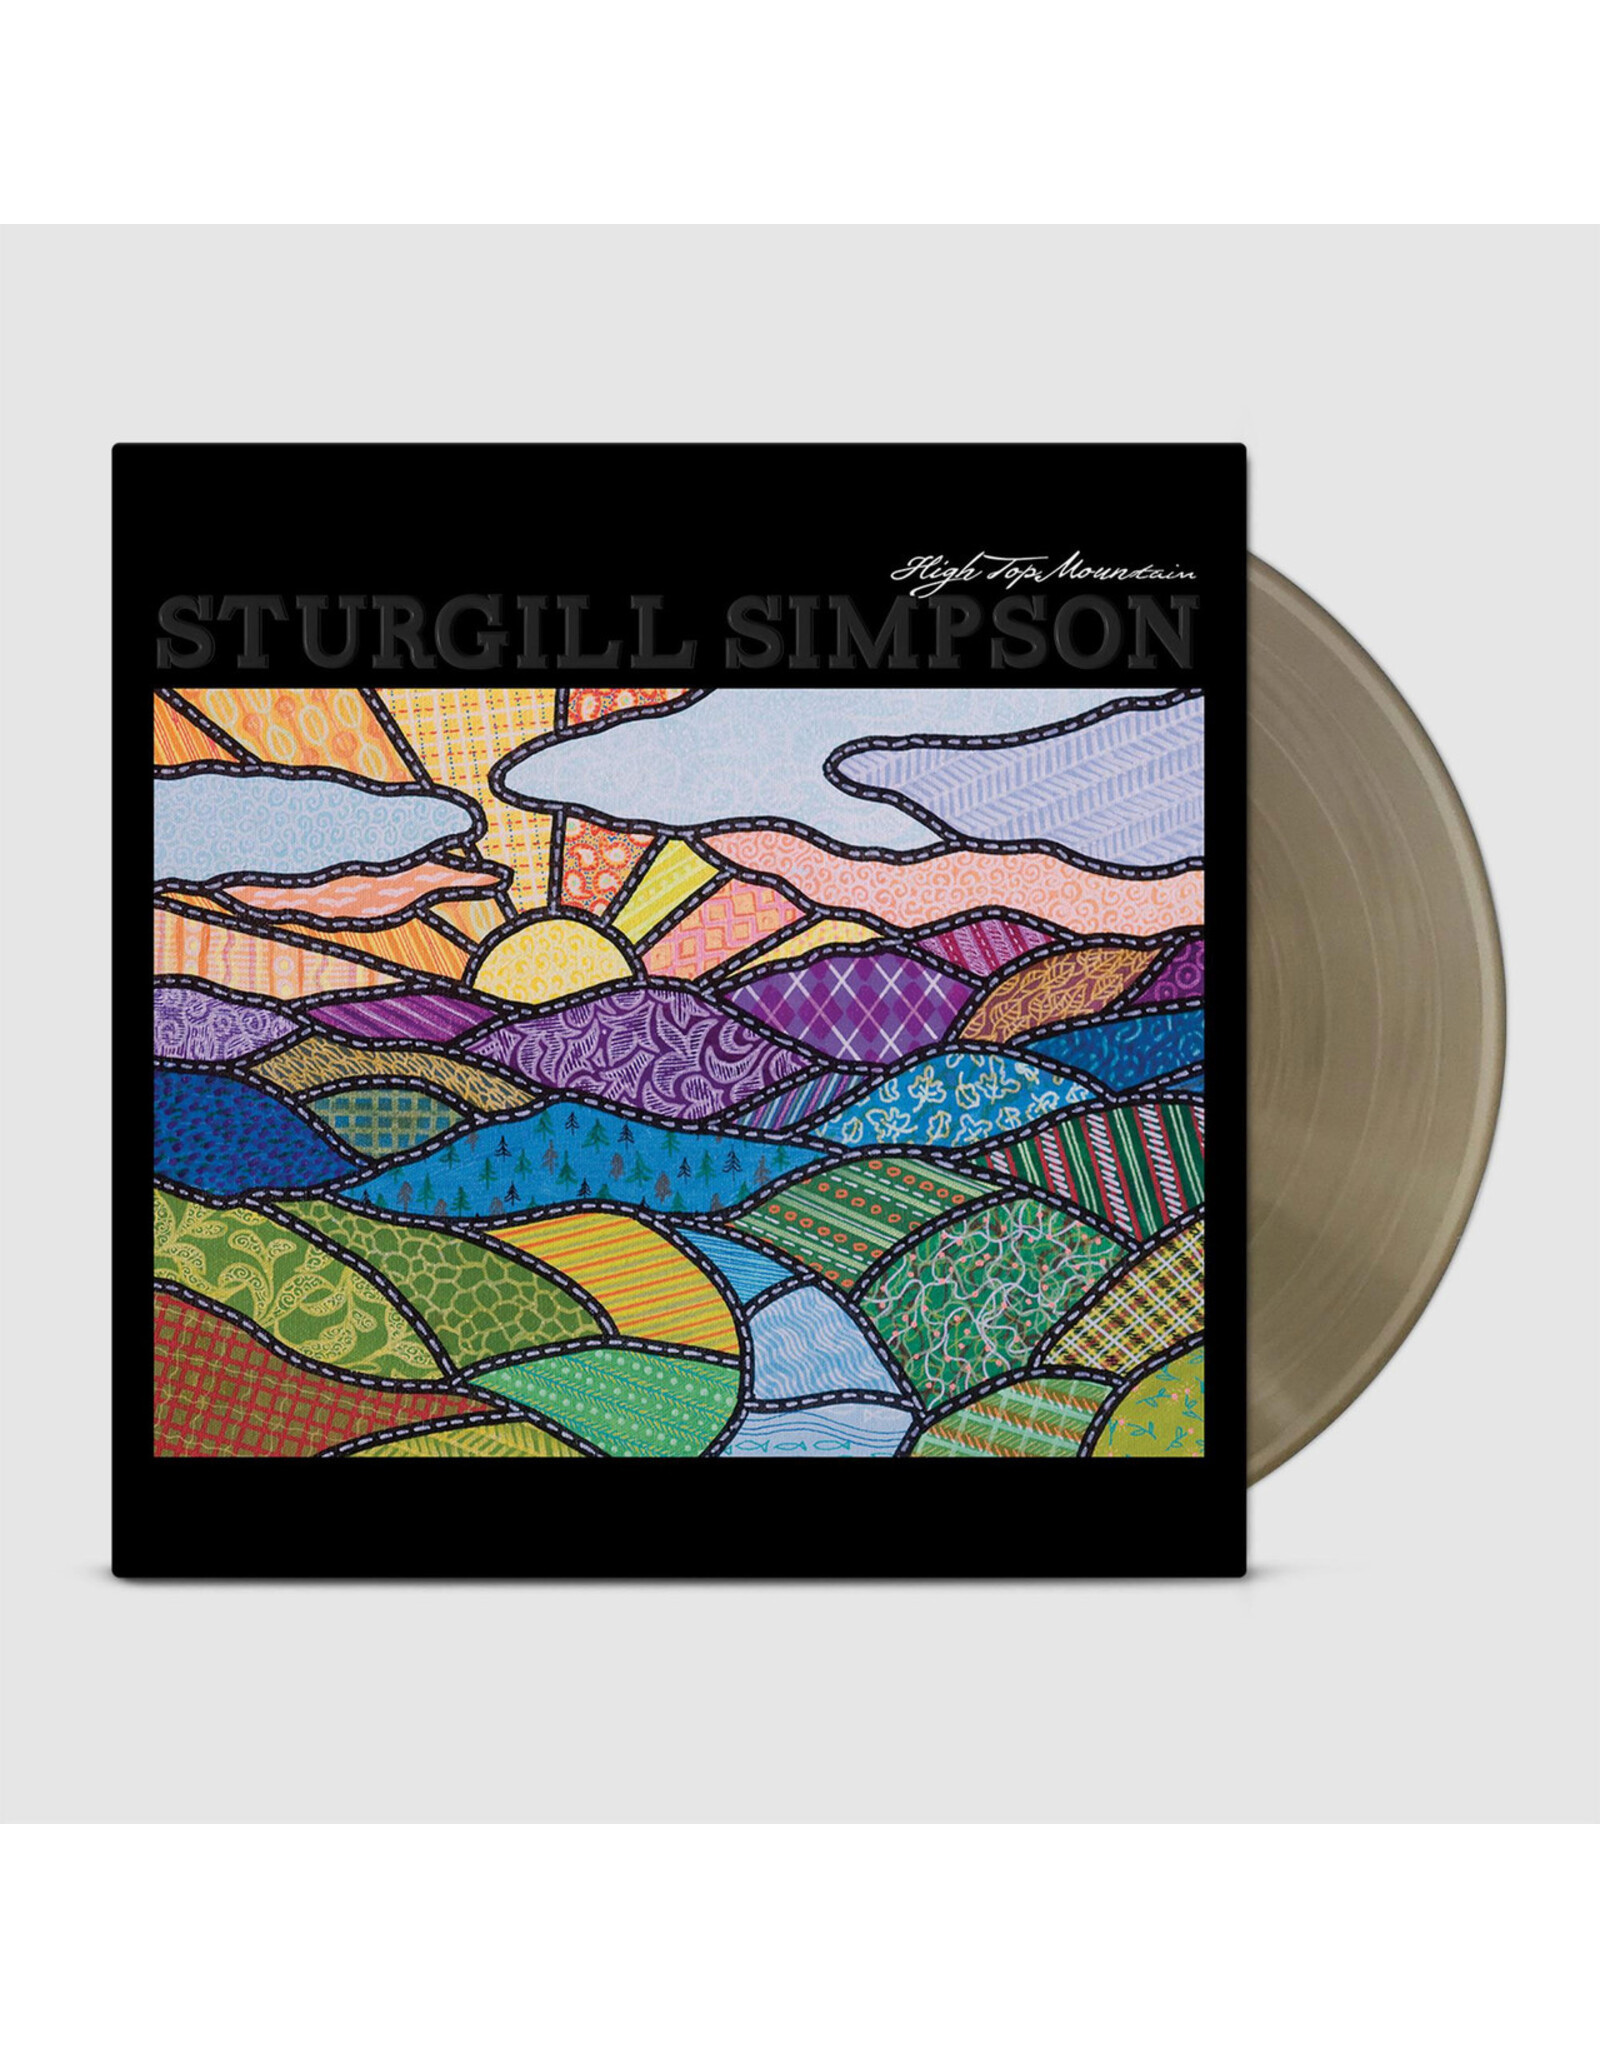 Sturgill Simpson - High Top Mountain (10th Anniversary)